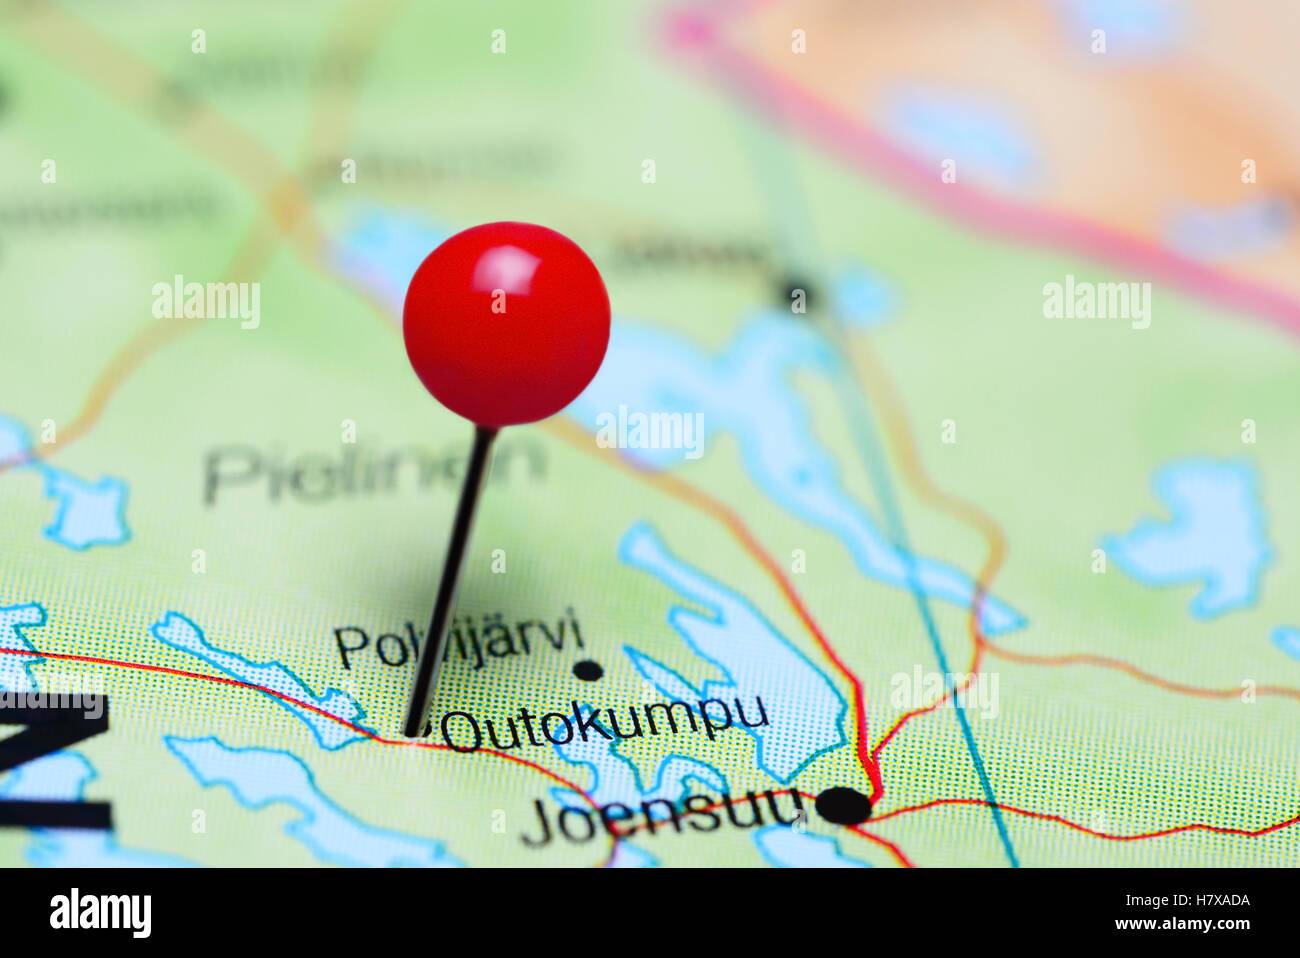 Outokumpu pinned on a map of Finland Stock Photo